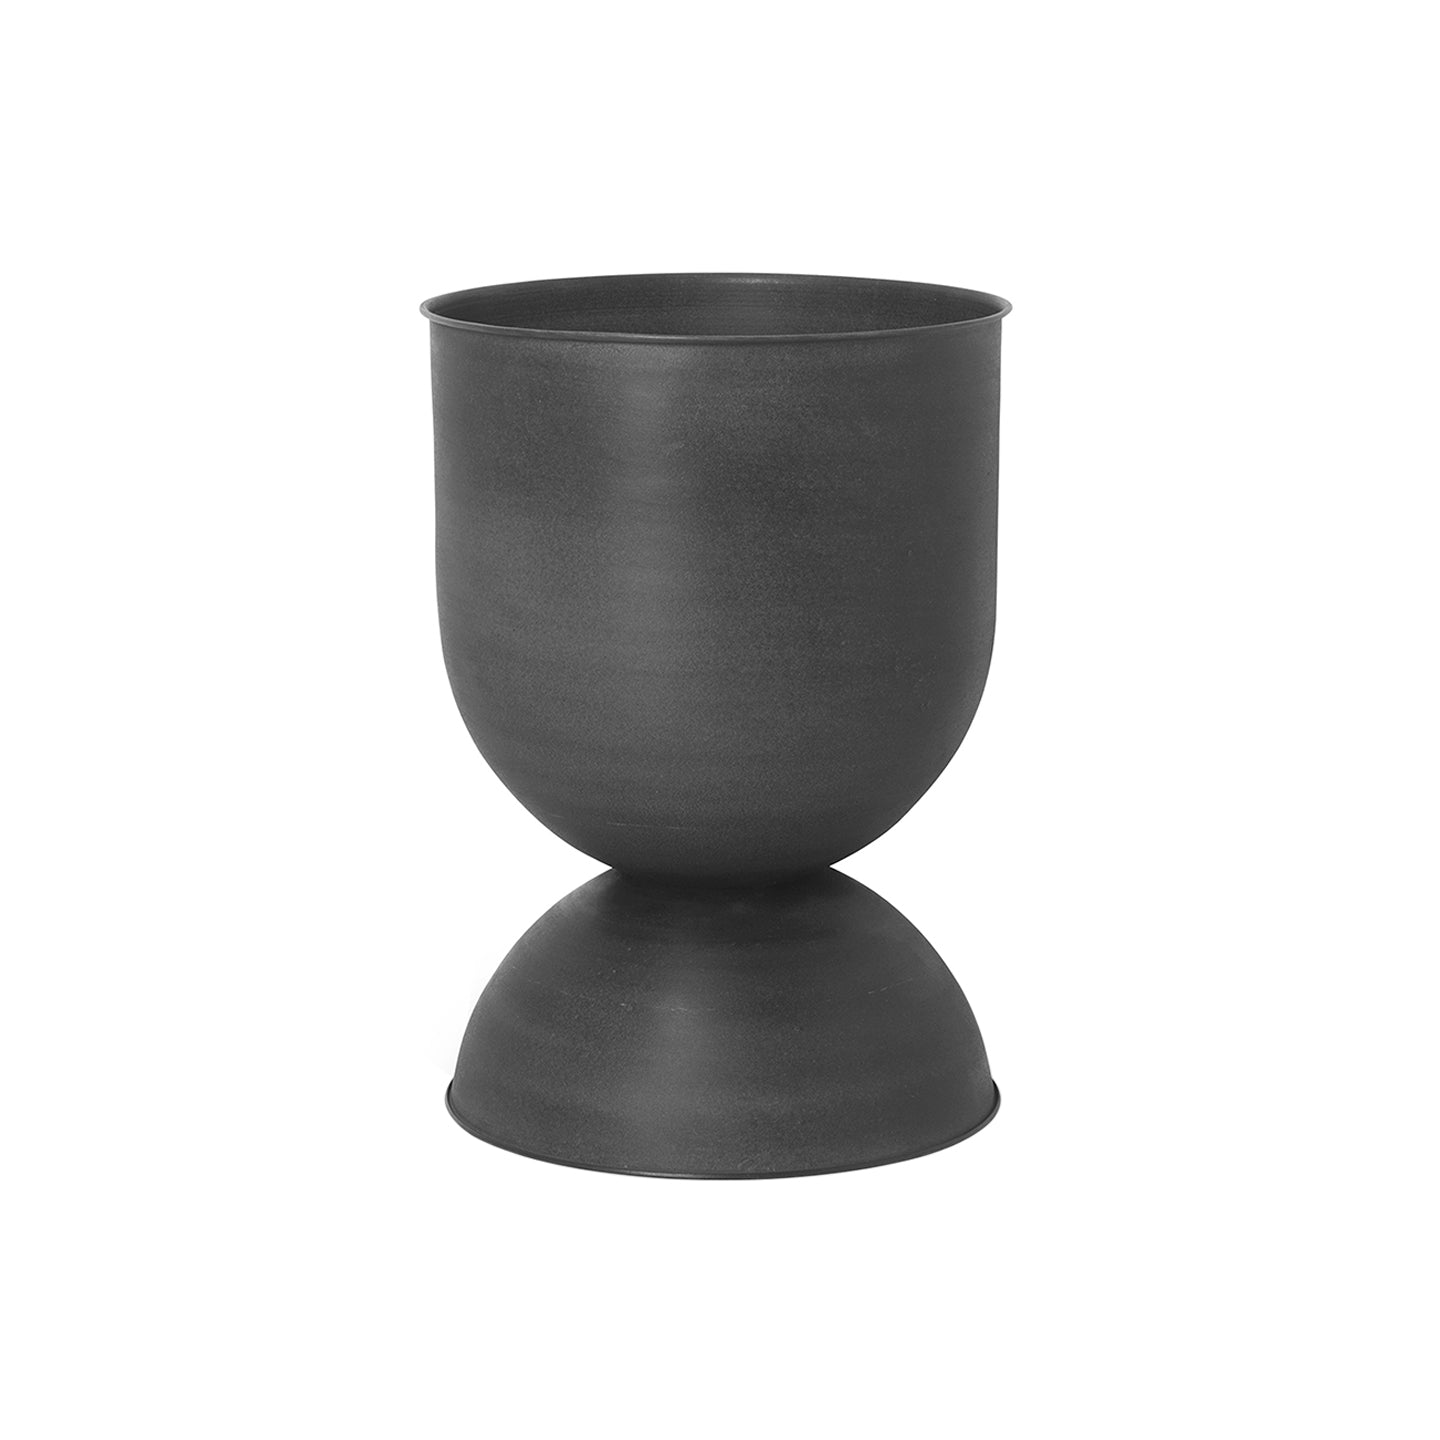 Hourglass Pot: Medium - 15.7